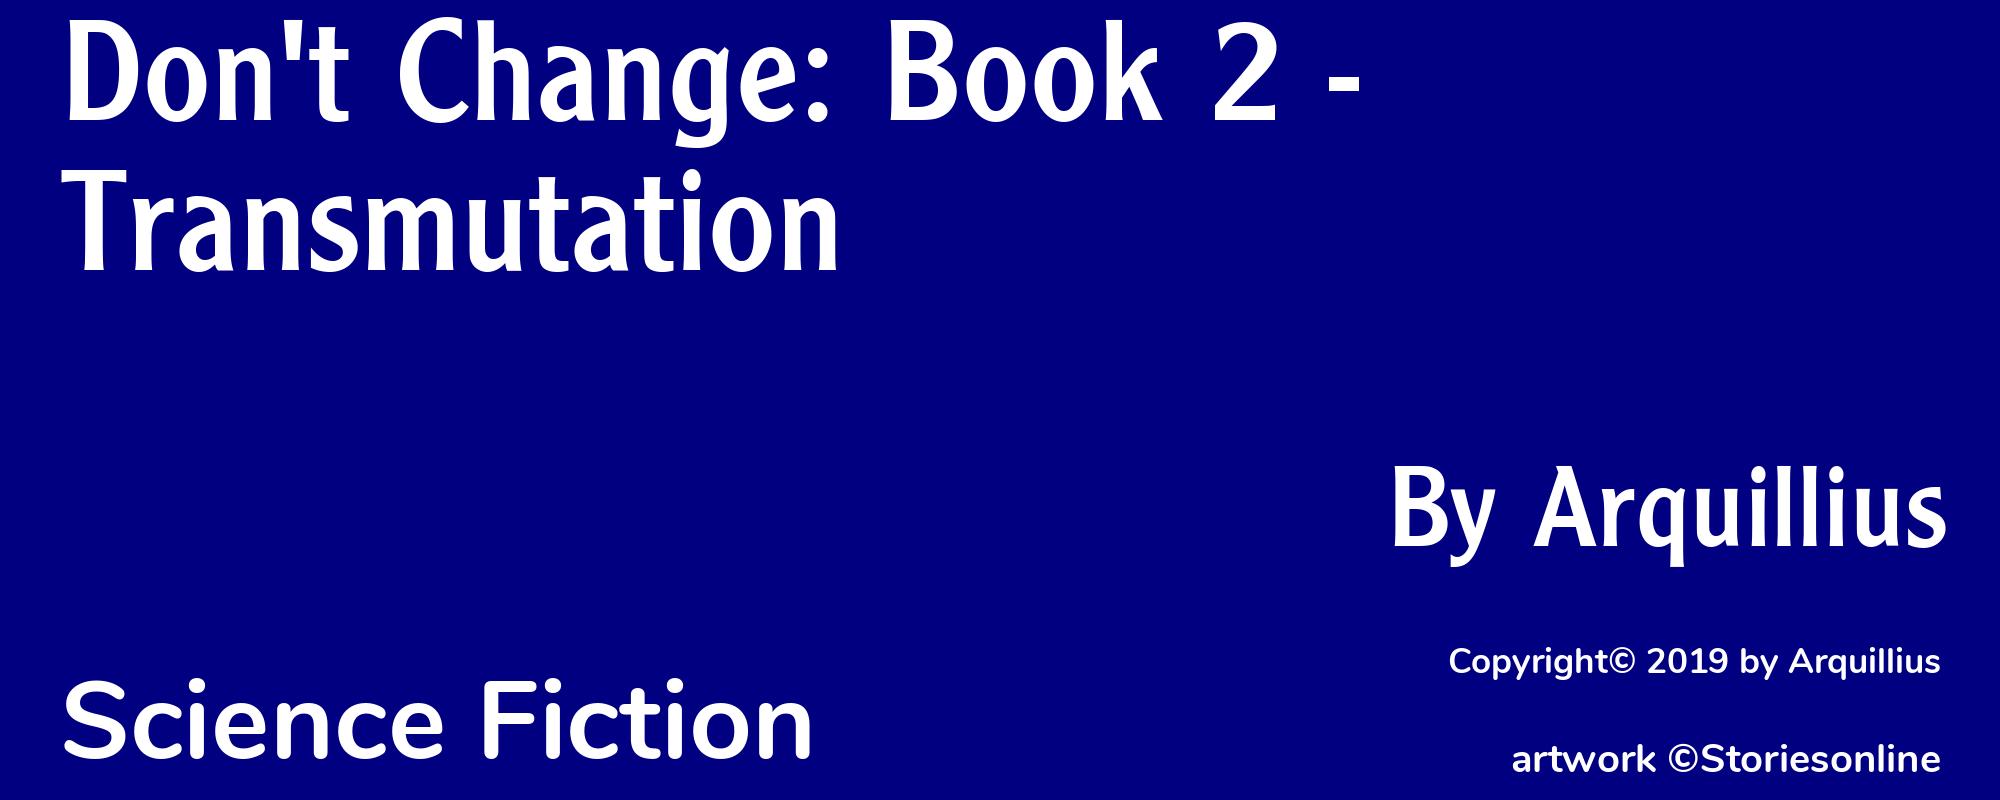 Don't Change: Book 2 - Transmutation - Cover